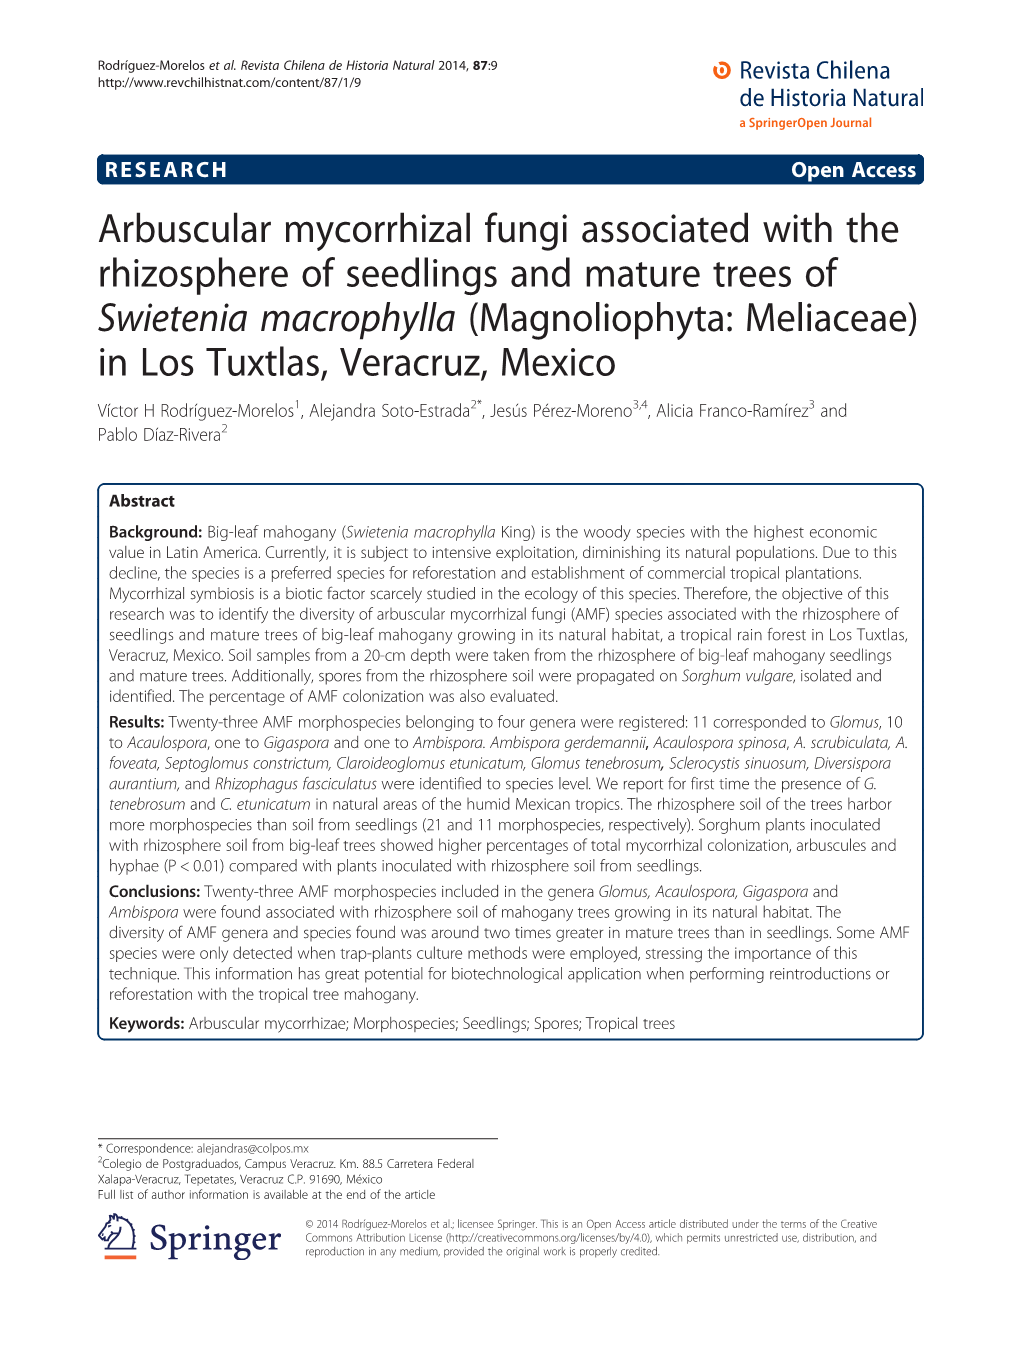 Arbuscular Mycorrhizal Fungi Associated with the Rhizosphere Of